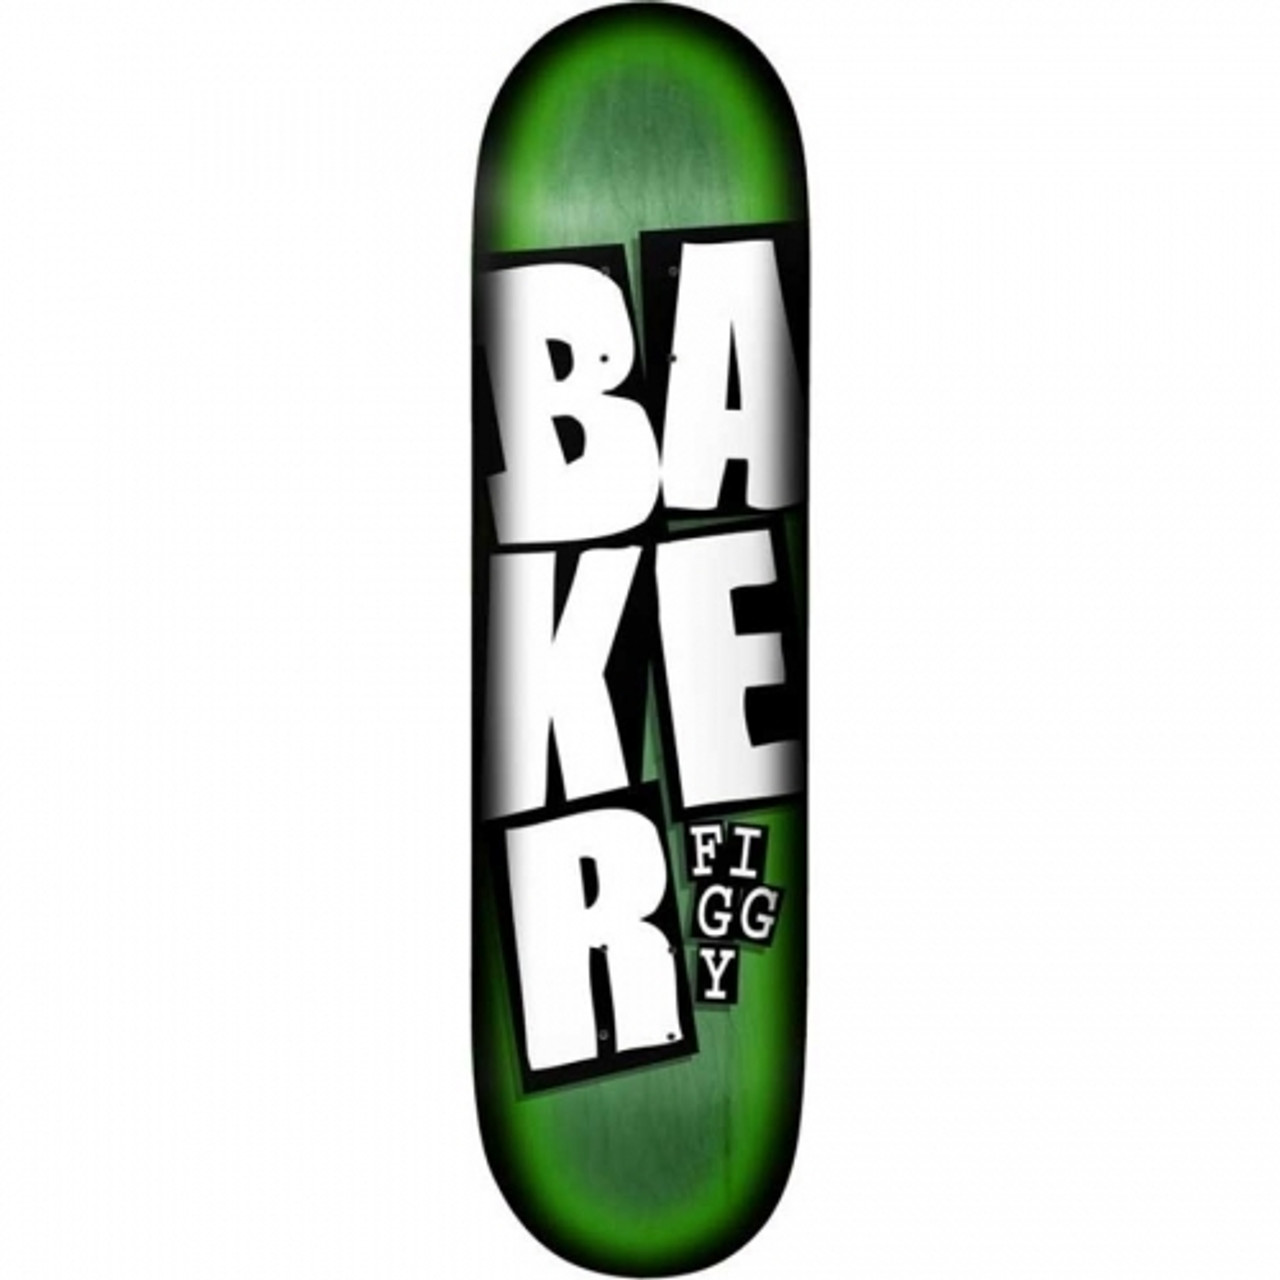 Baker Justin Figgy Stacked Name Skate Deck Green 8.125